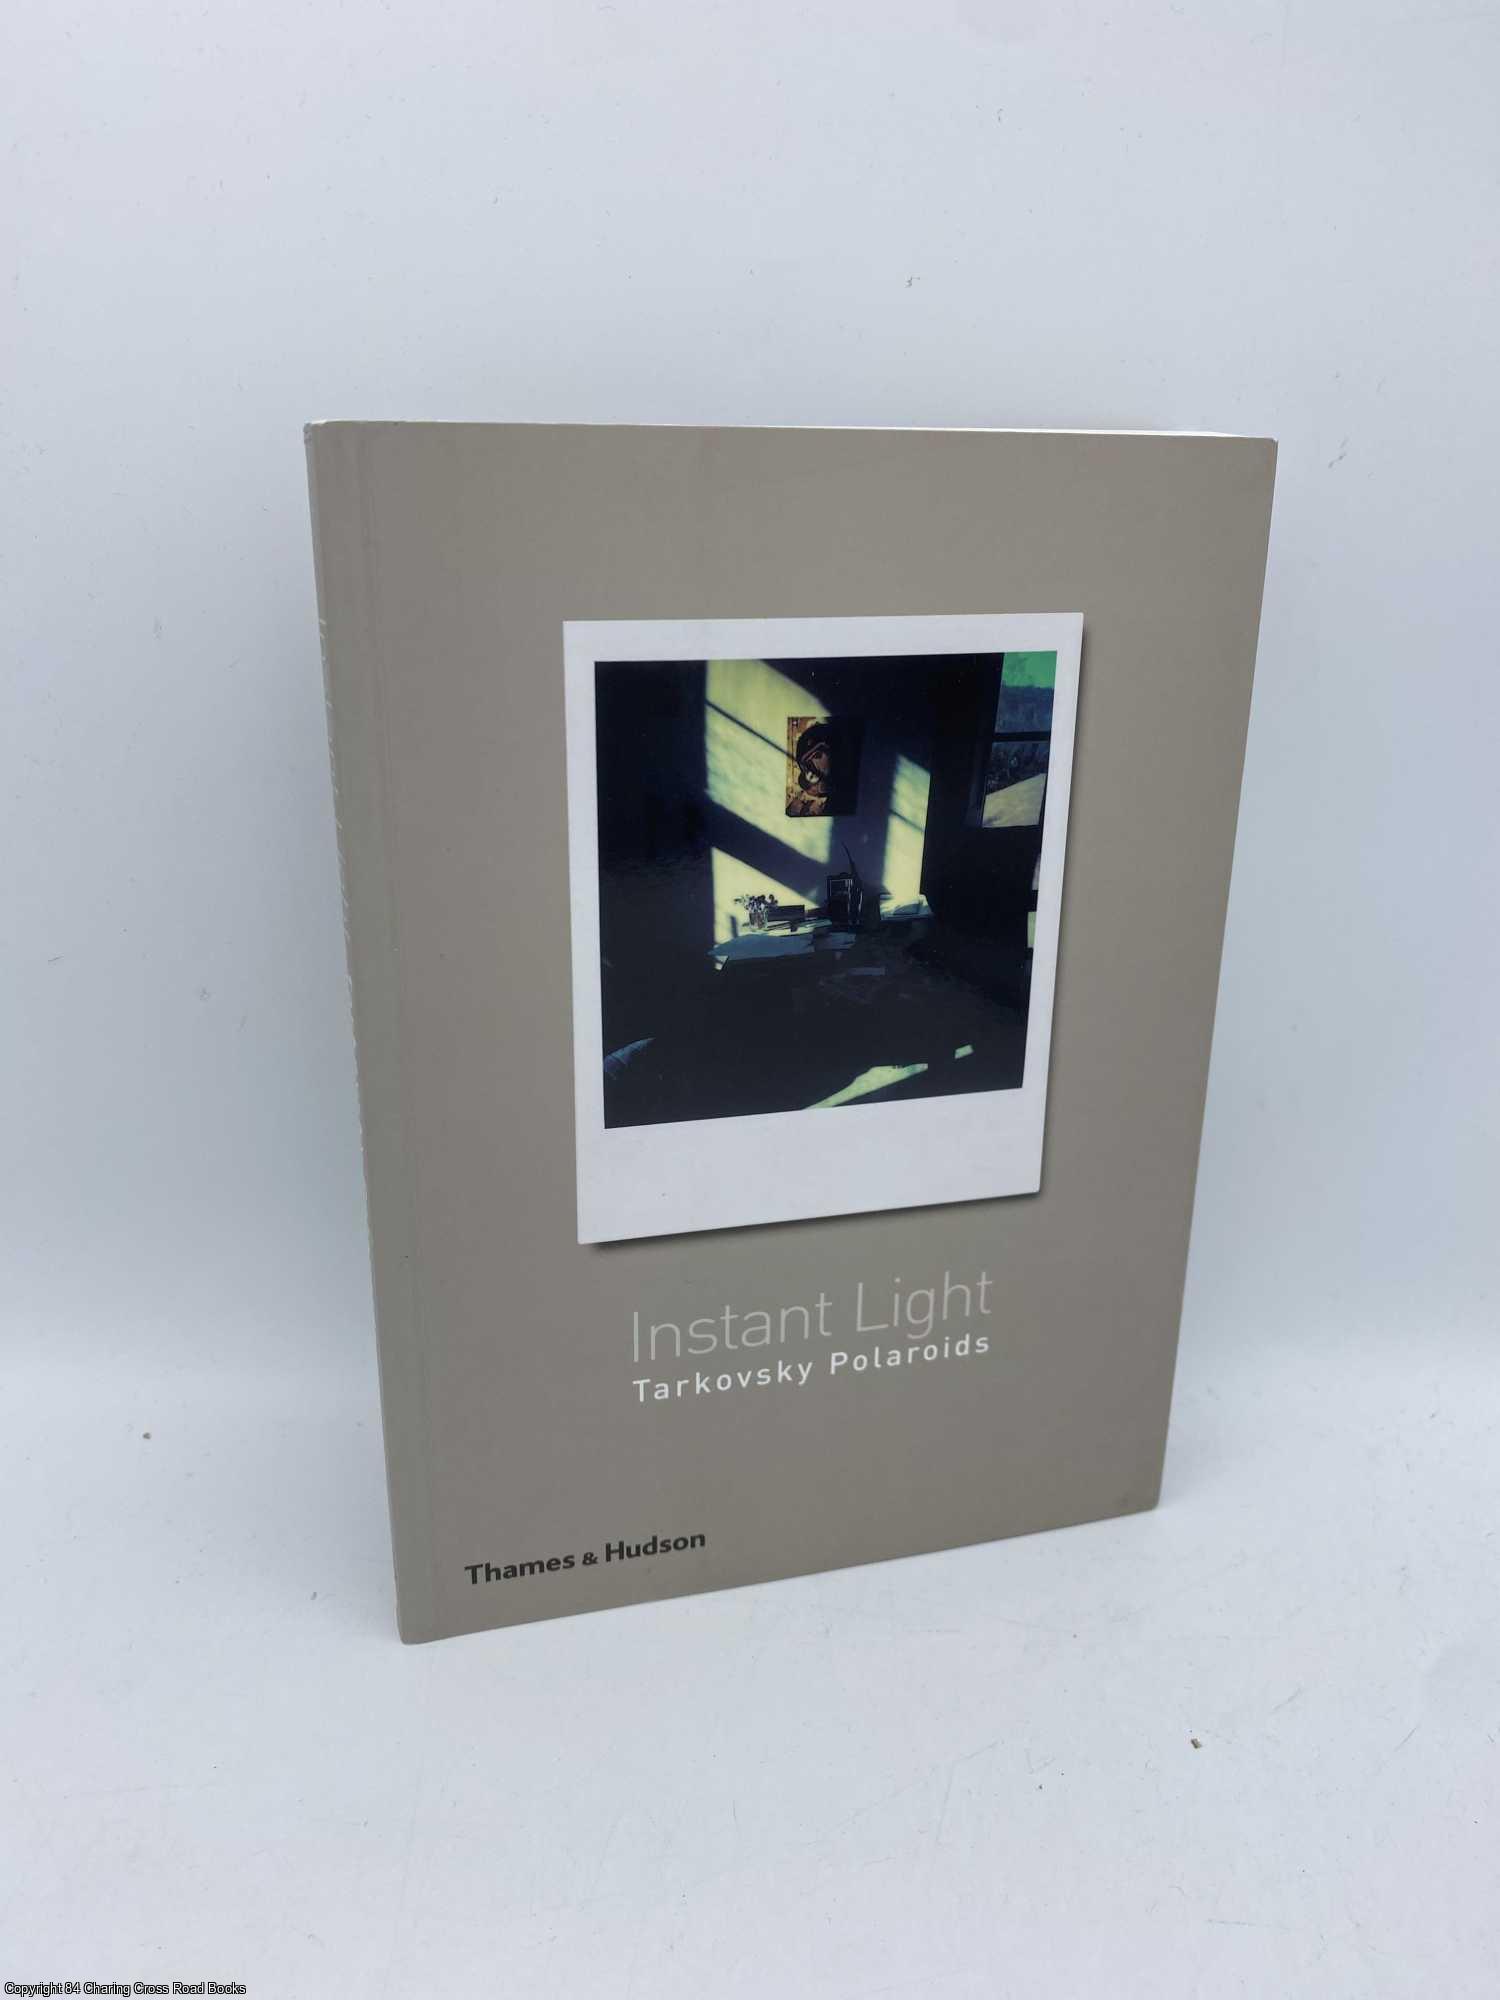 Instant Light Tarkovsky Polaroids by Andrey Tarkovsky, Chiaramonte on 84  Charing Cross Rare Books